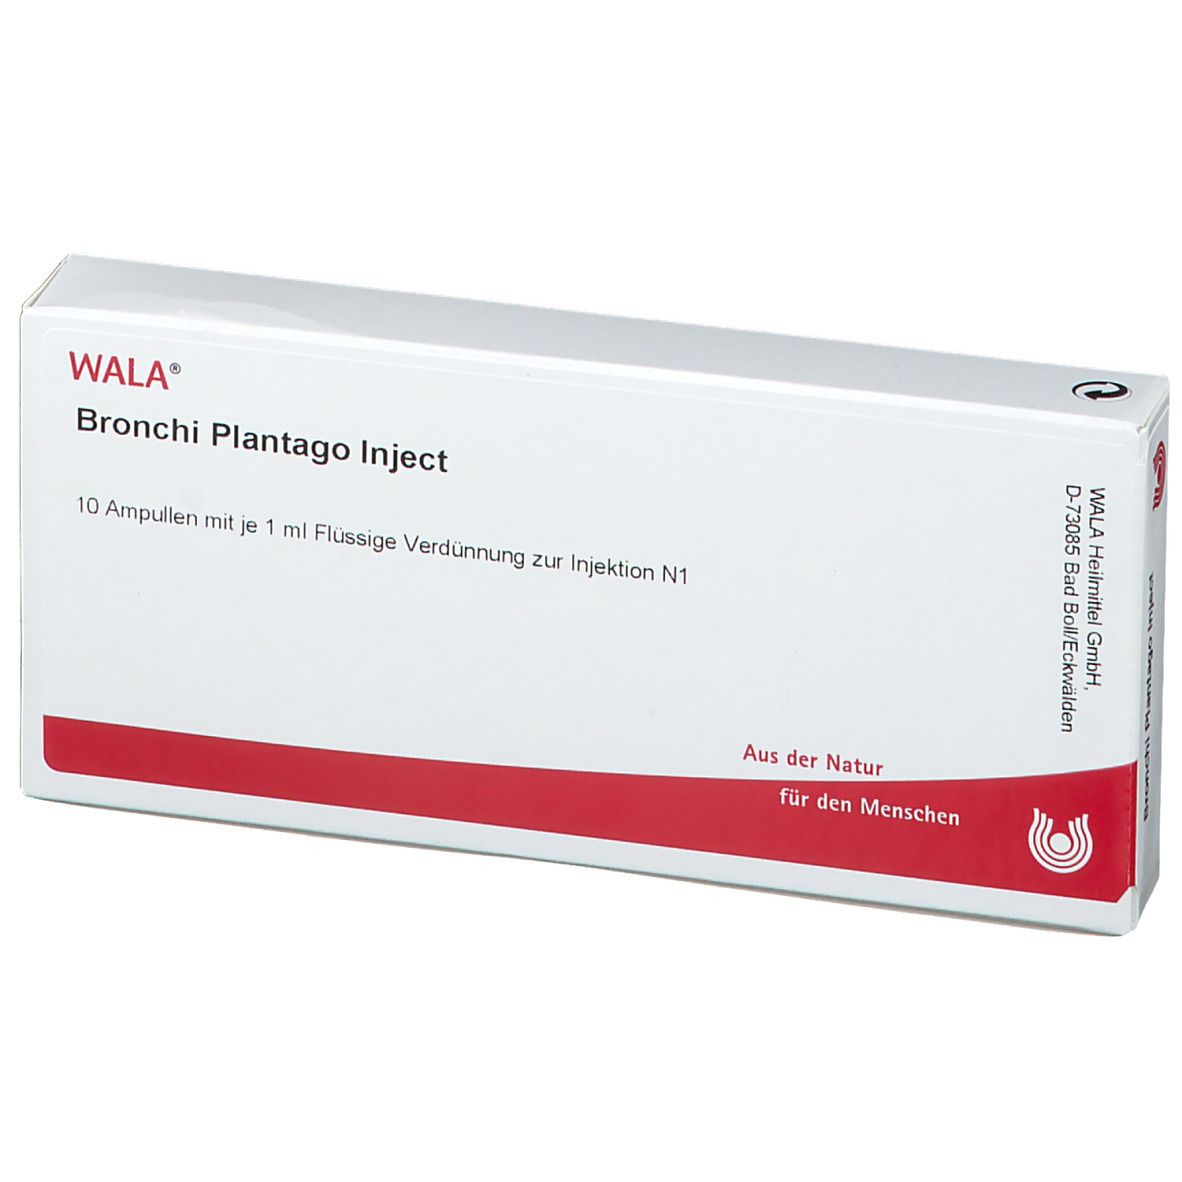 WALA® Bronchi Plantago Inject Amp.